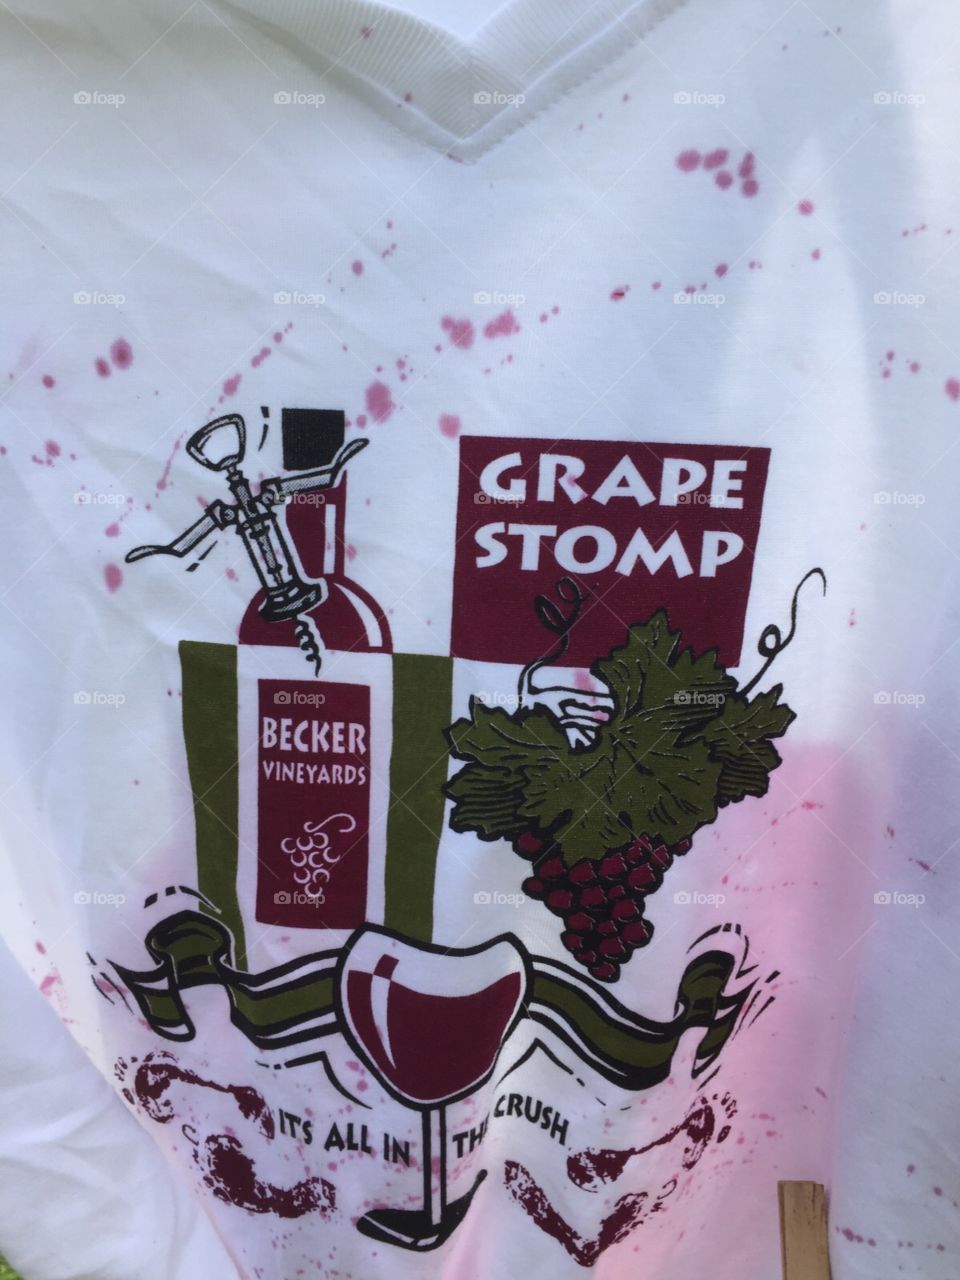 Grape stomping shirt